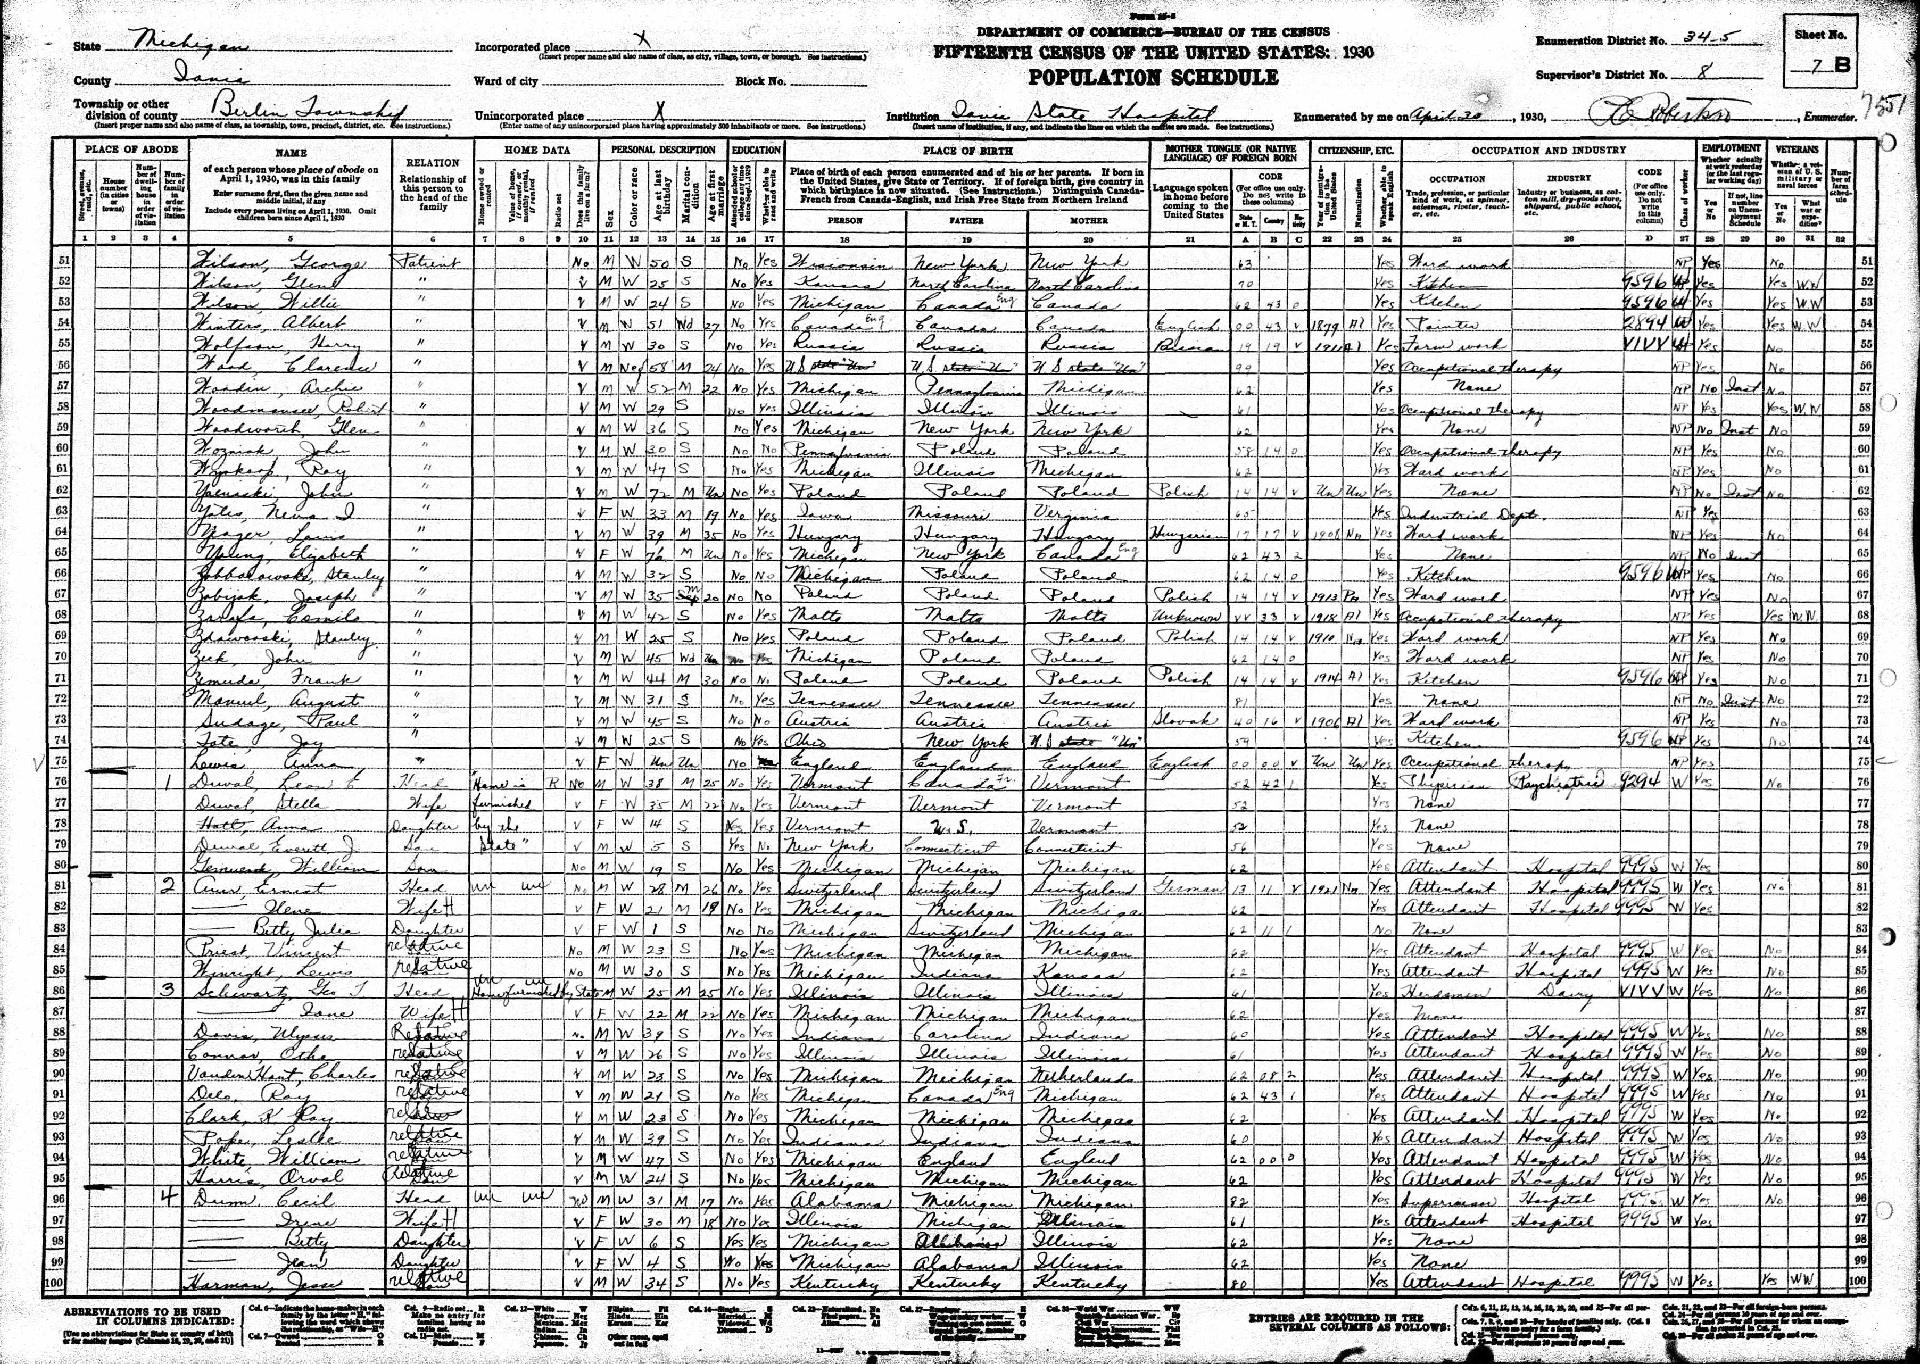 1925 new york census